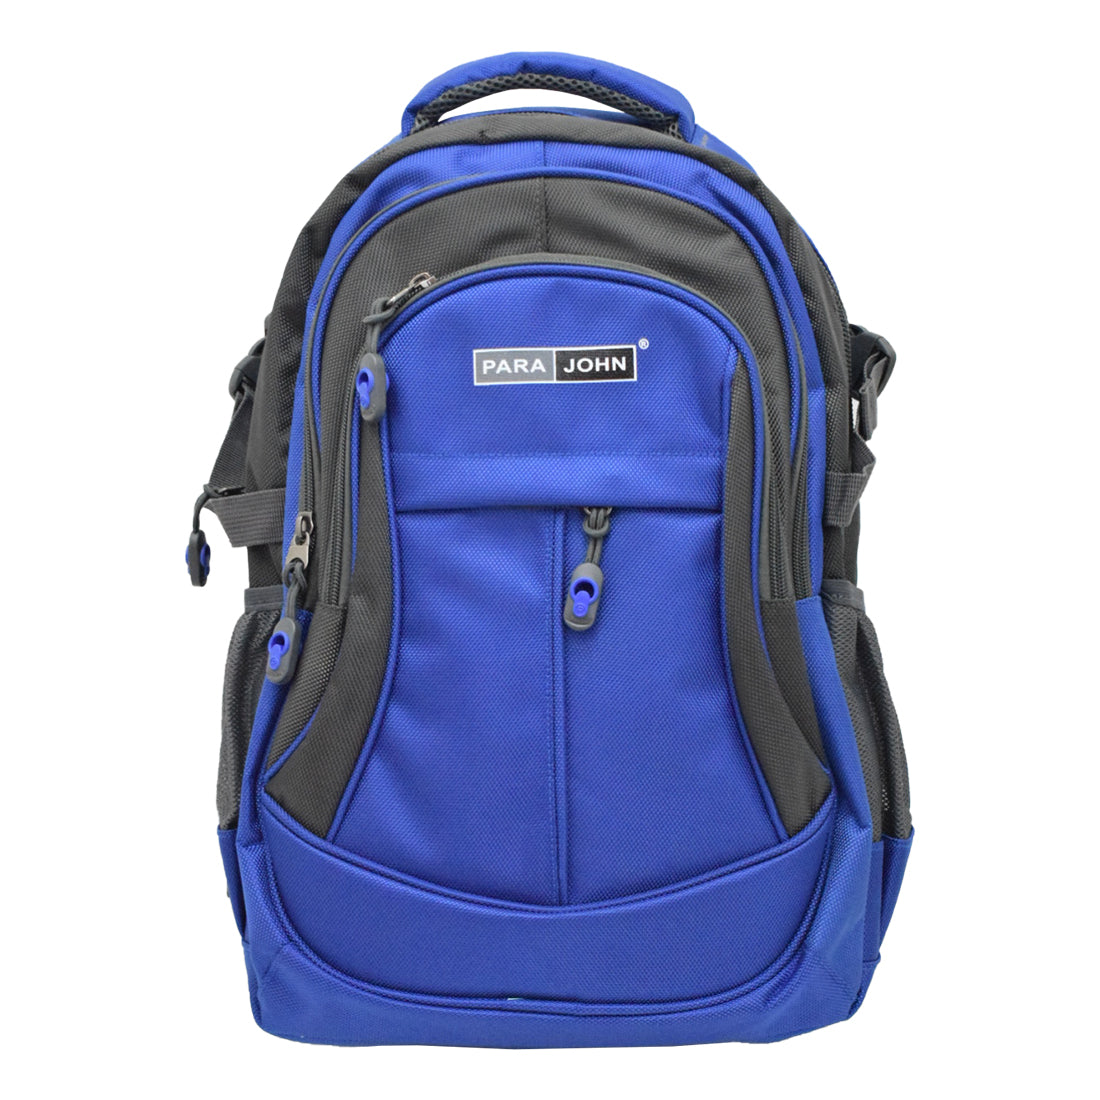 Parajohn School Bag 18'' - GRAY/BLUE